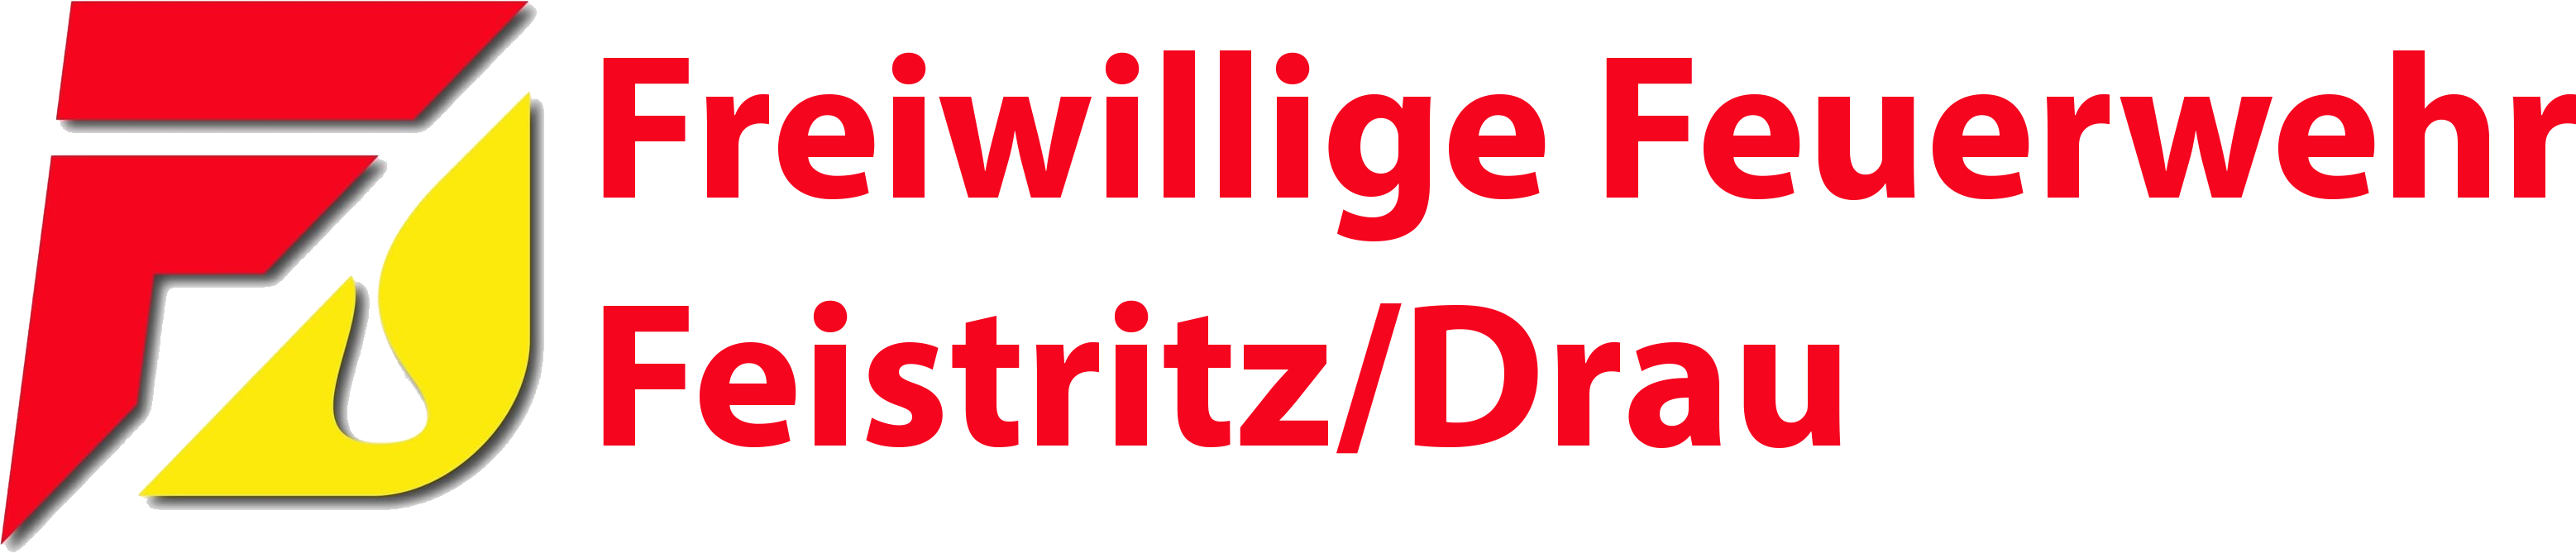 Freiwillige Feuerwehr Feistritz/Drau